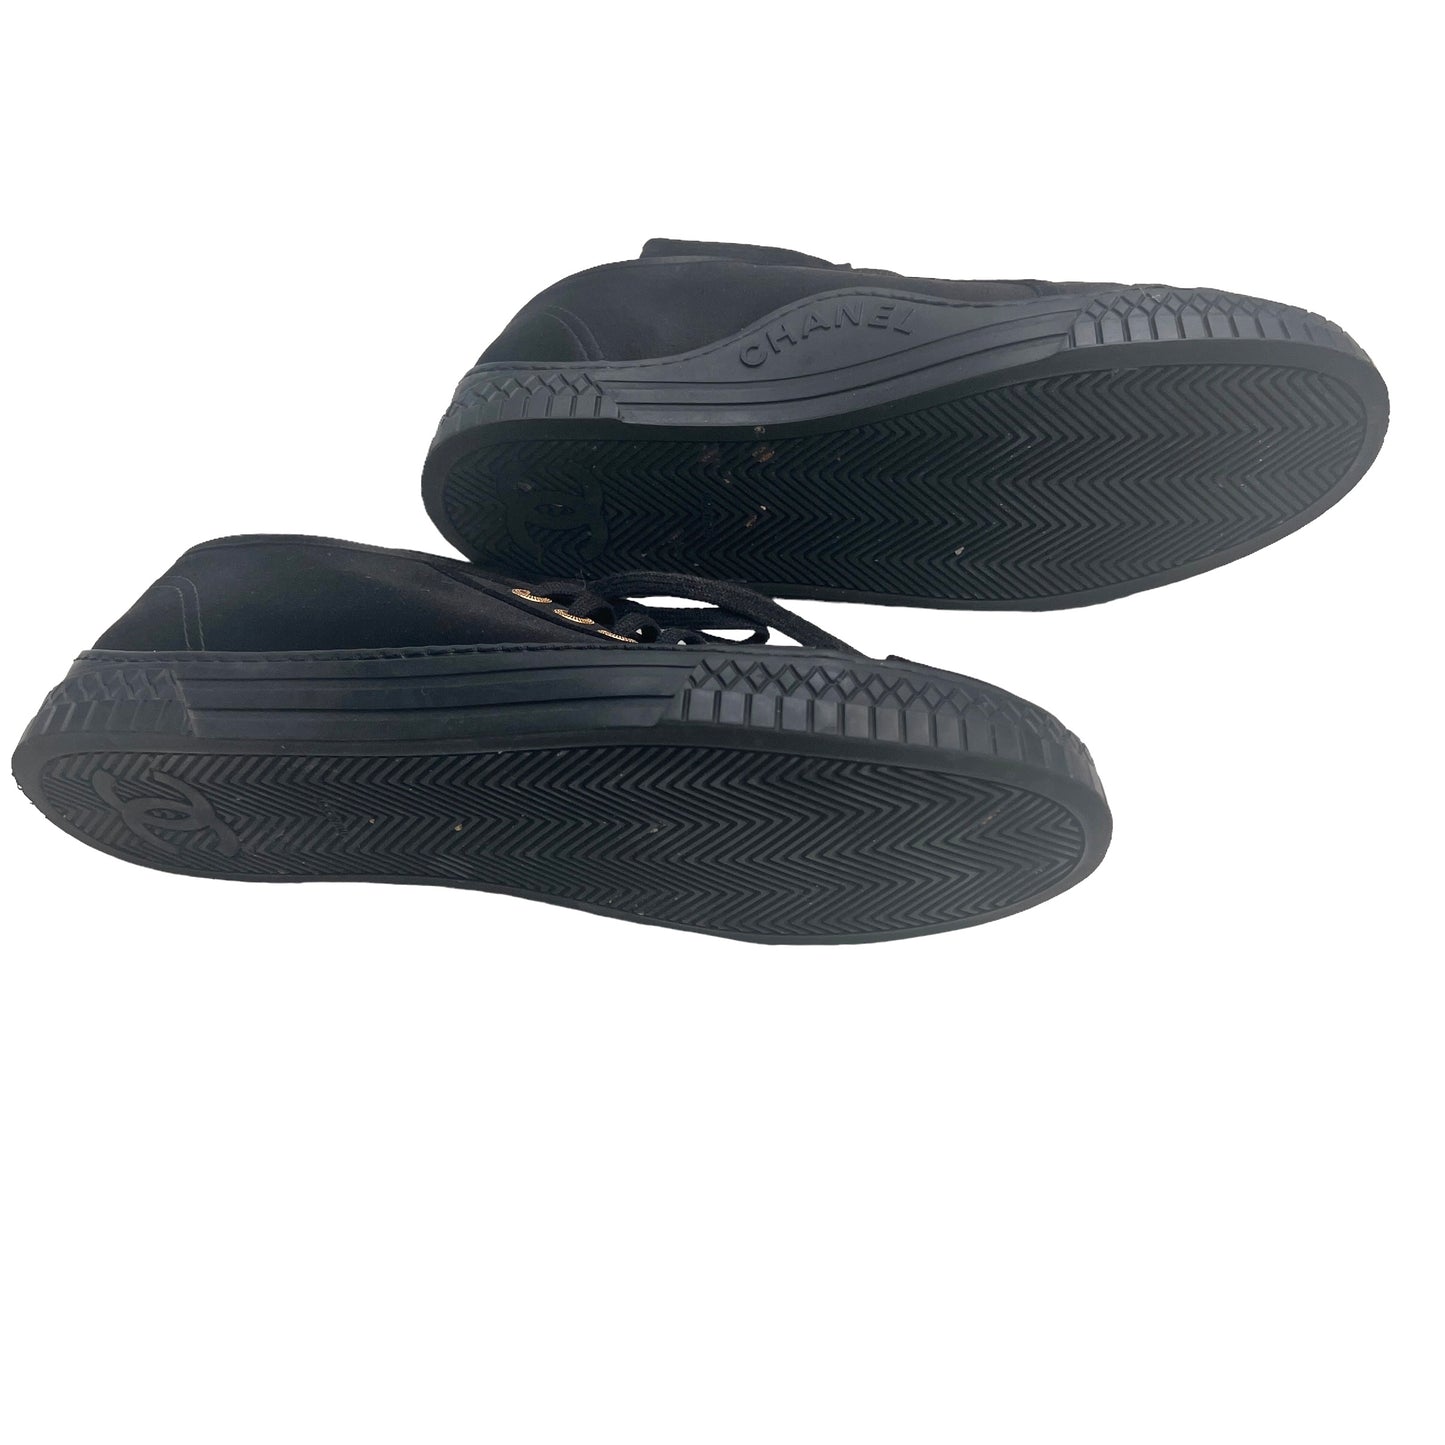 Black Satin Sneakers - 9.5